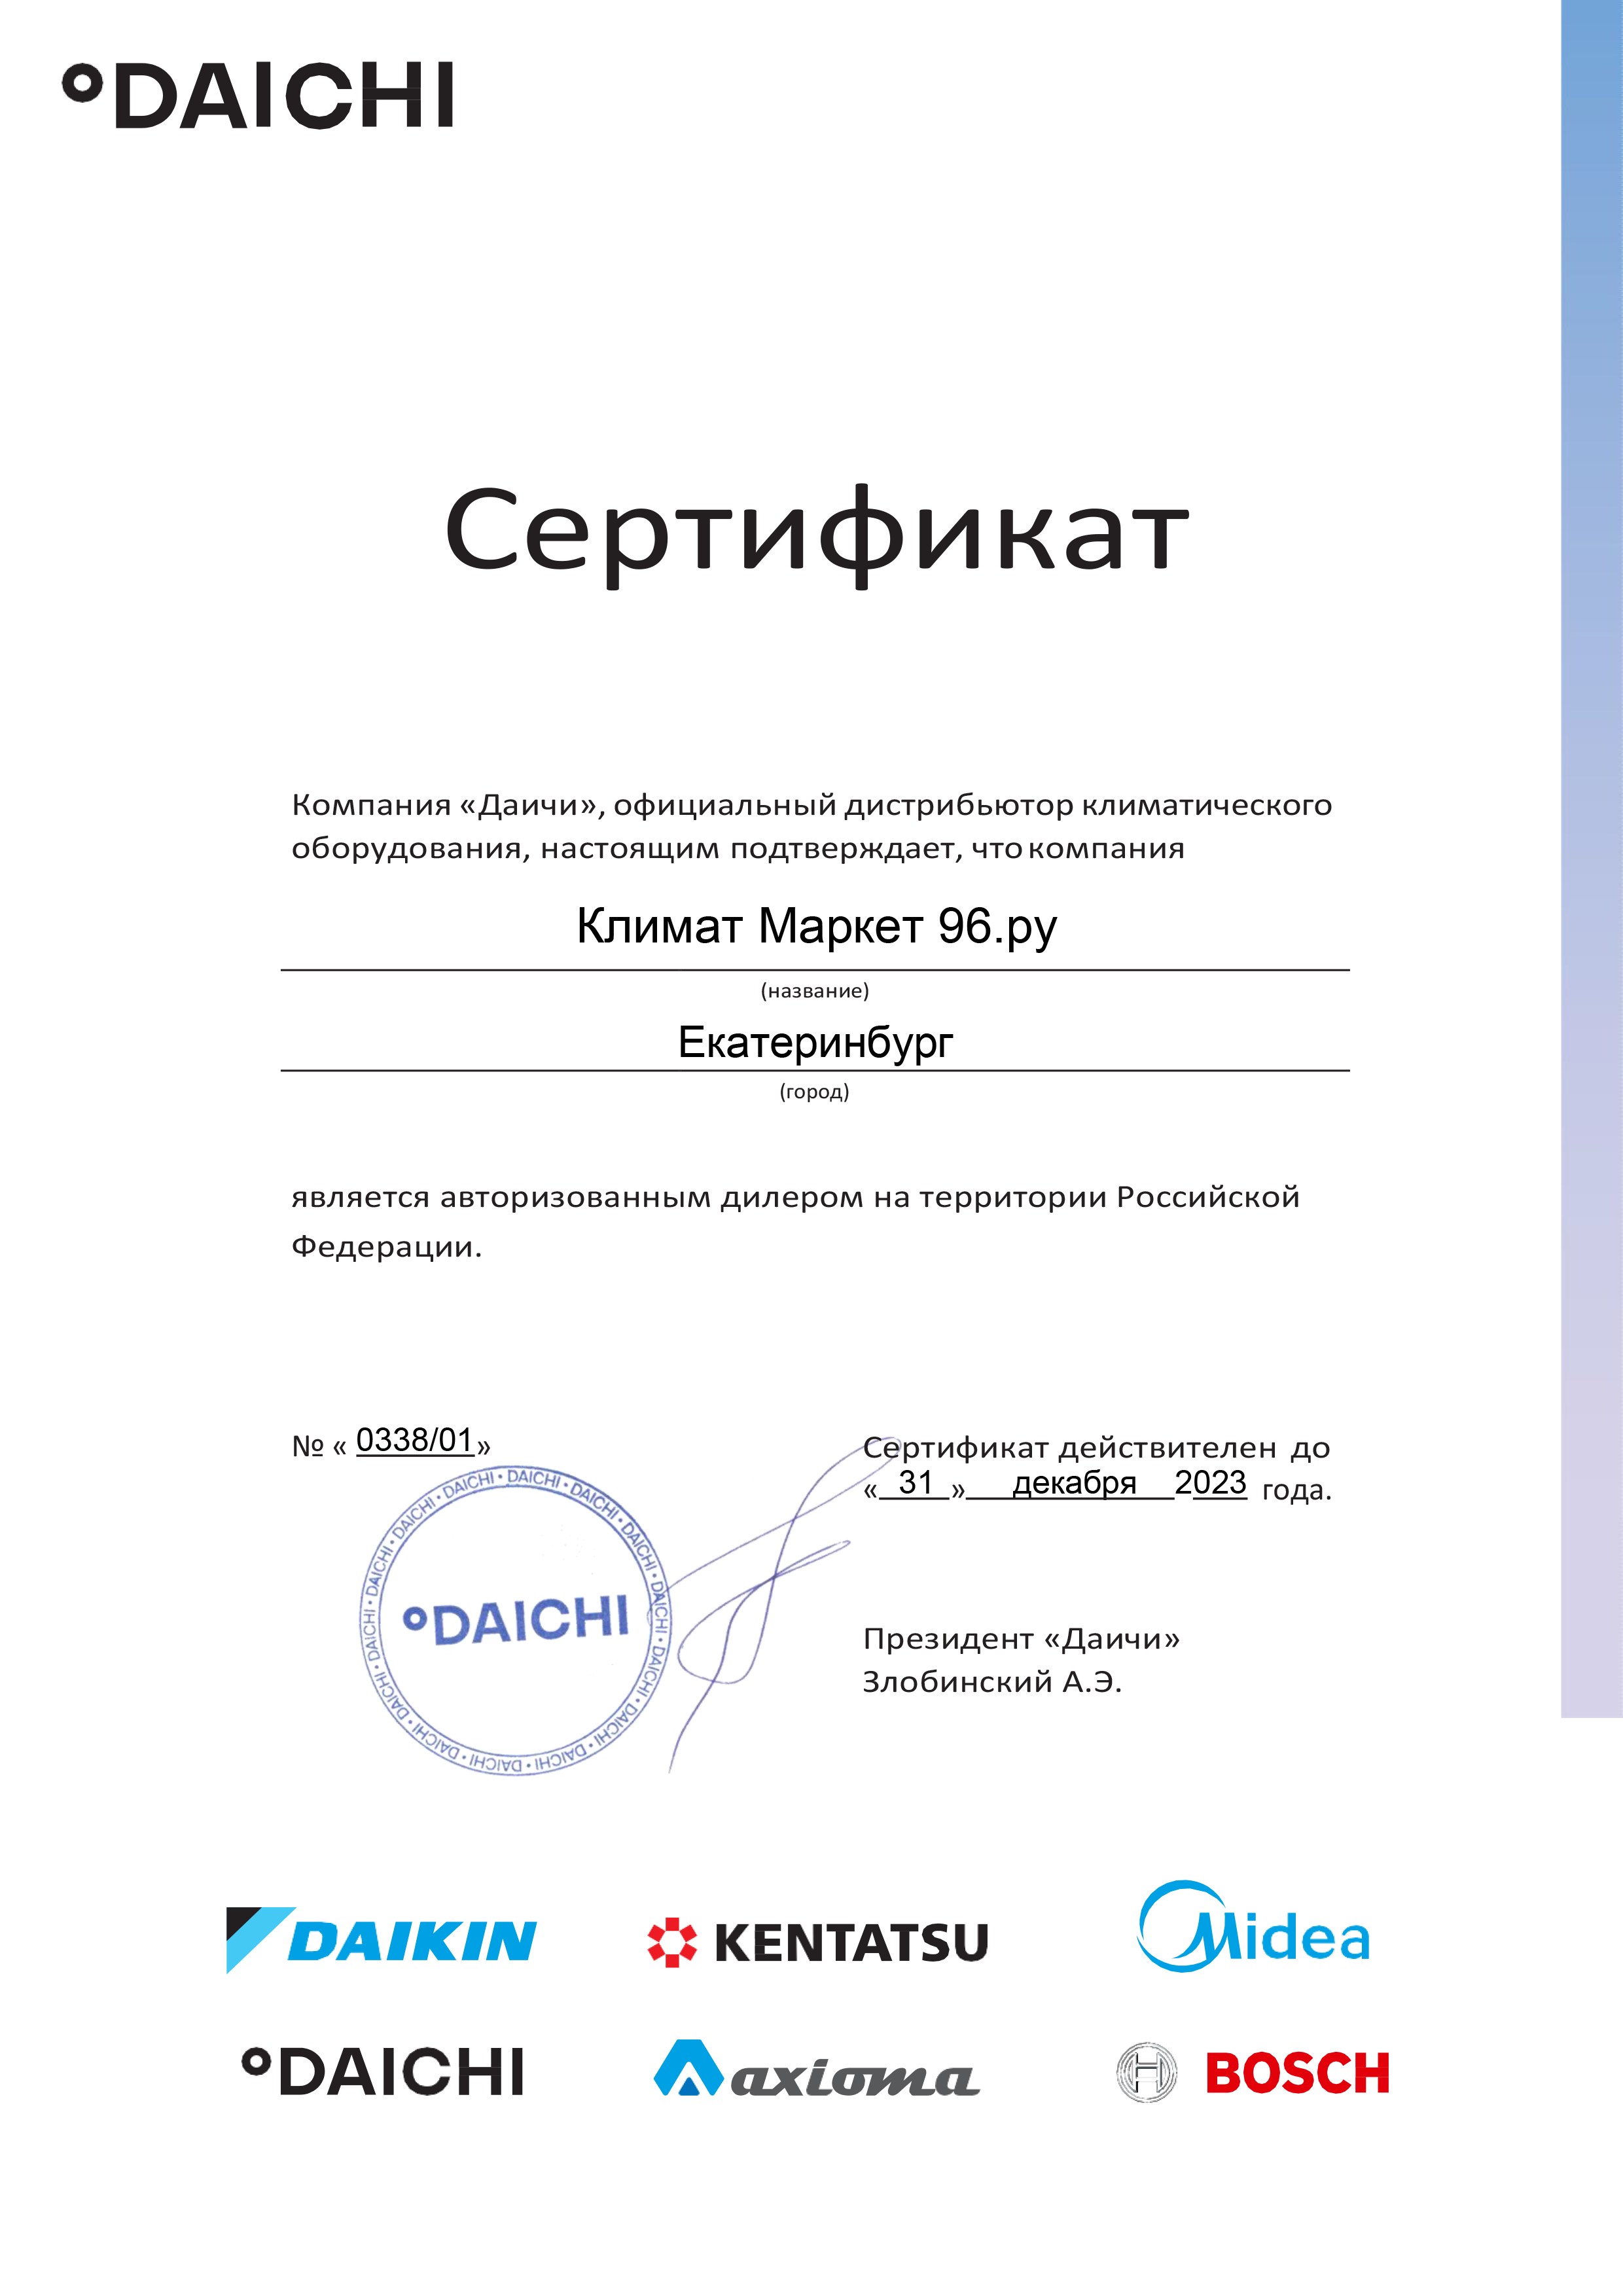 daichi-km96 Kondicioner Daikin FTYN25L/RYN25L kypit v Ekaterinbyrge v internet-magazine KlimatMarket96.ry Сертификат дилера